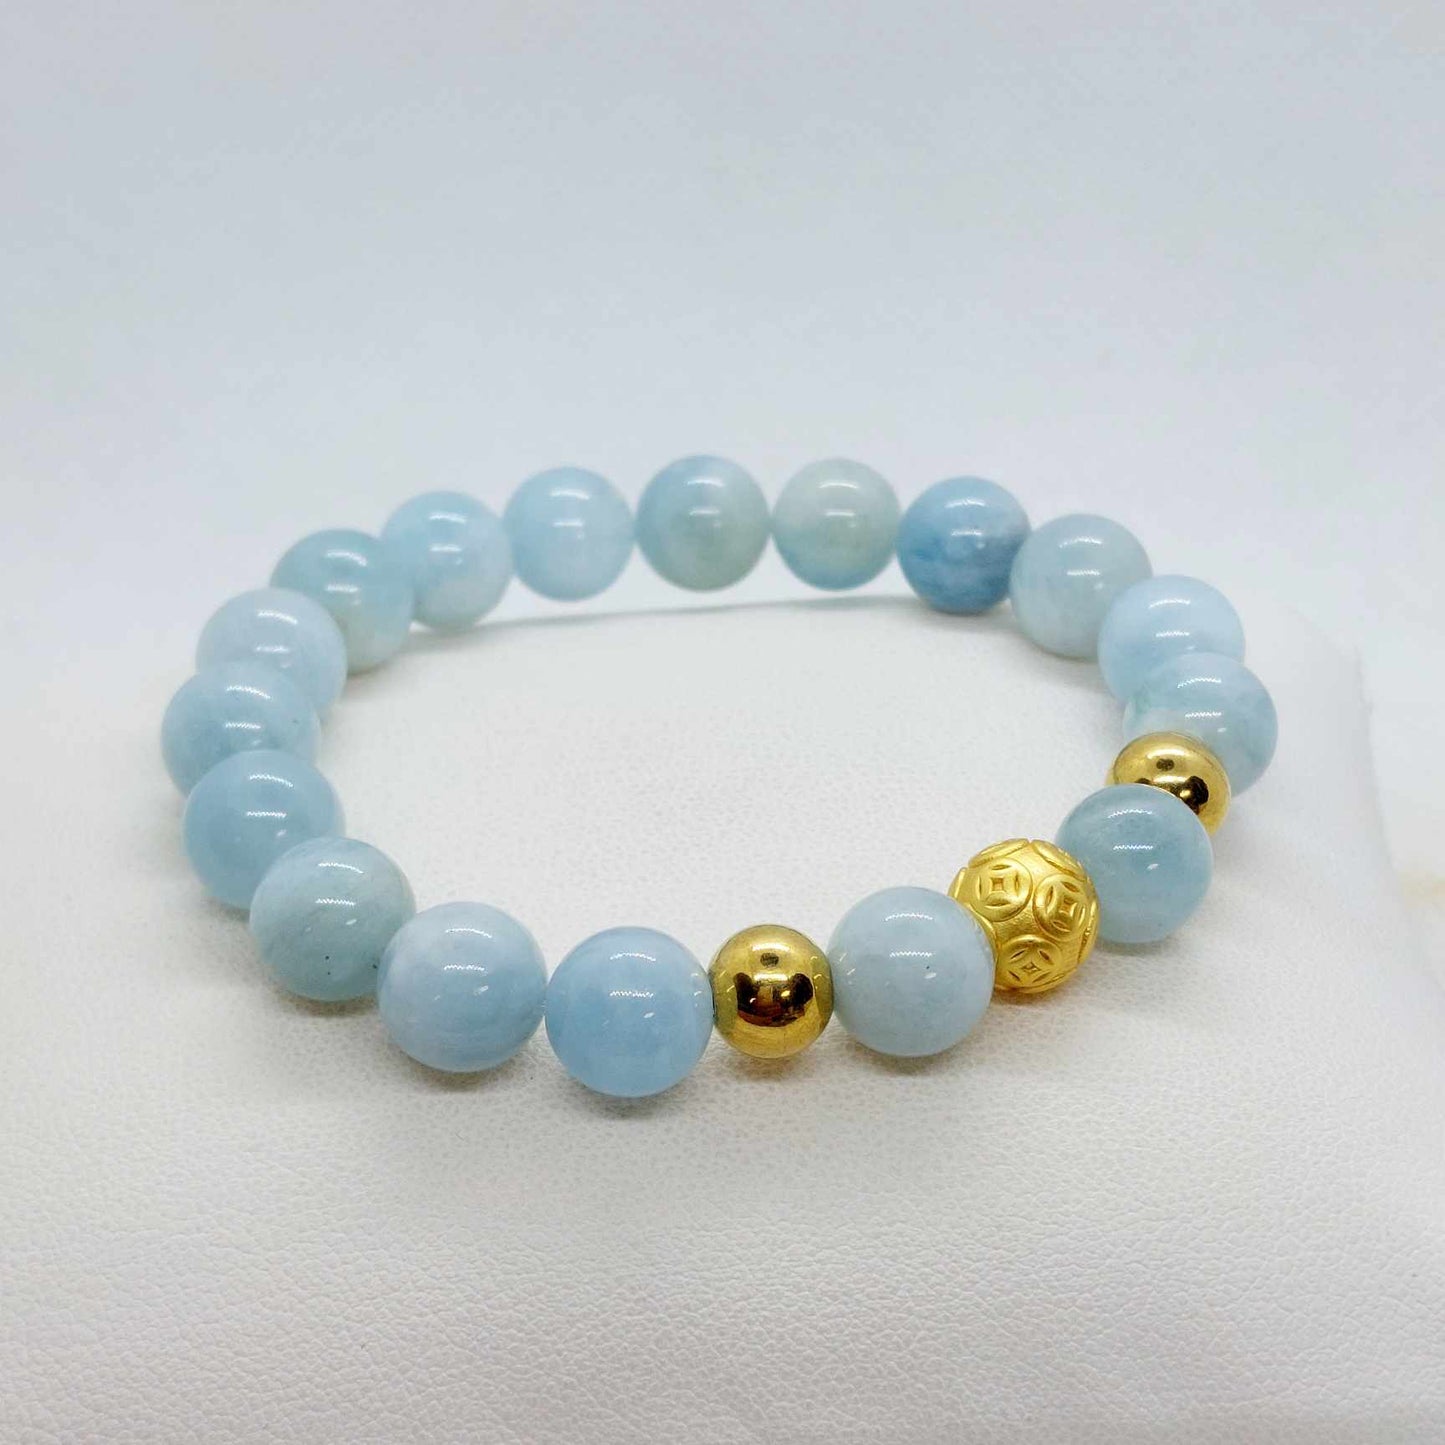 Natural Blue Aquamarine Bracelet with 10mm Stones